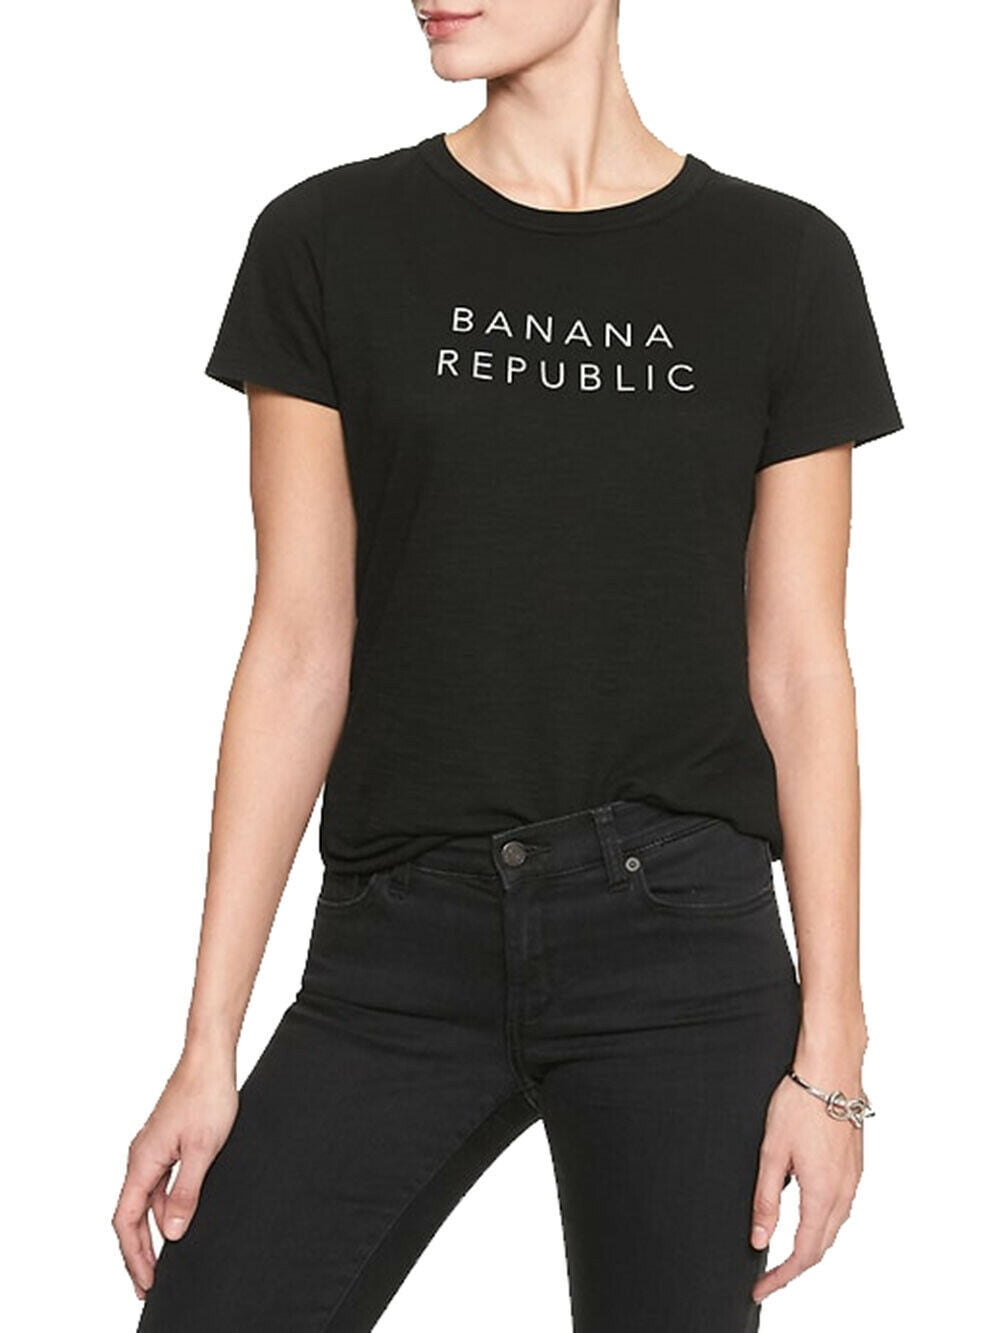 Banana Republic - New Banana Republic Womens Body Logo T Shirt, Black M